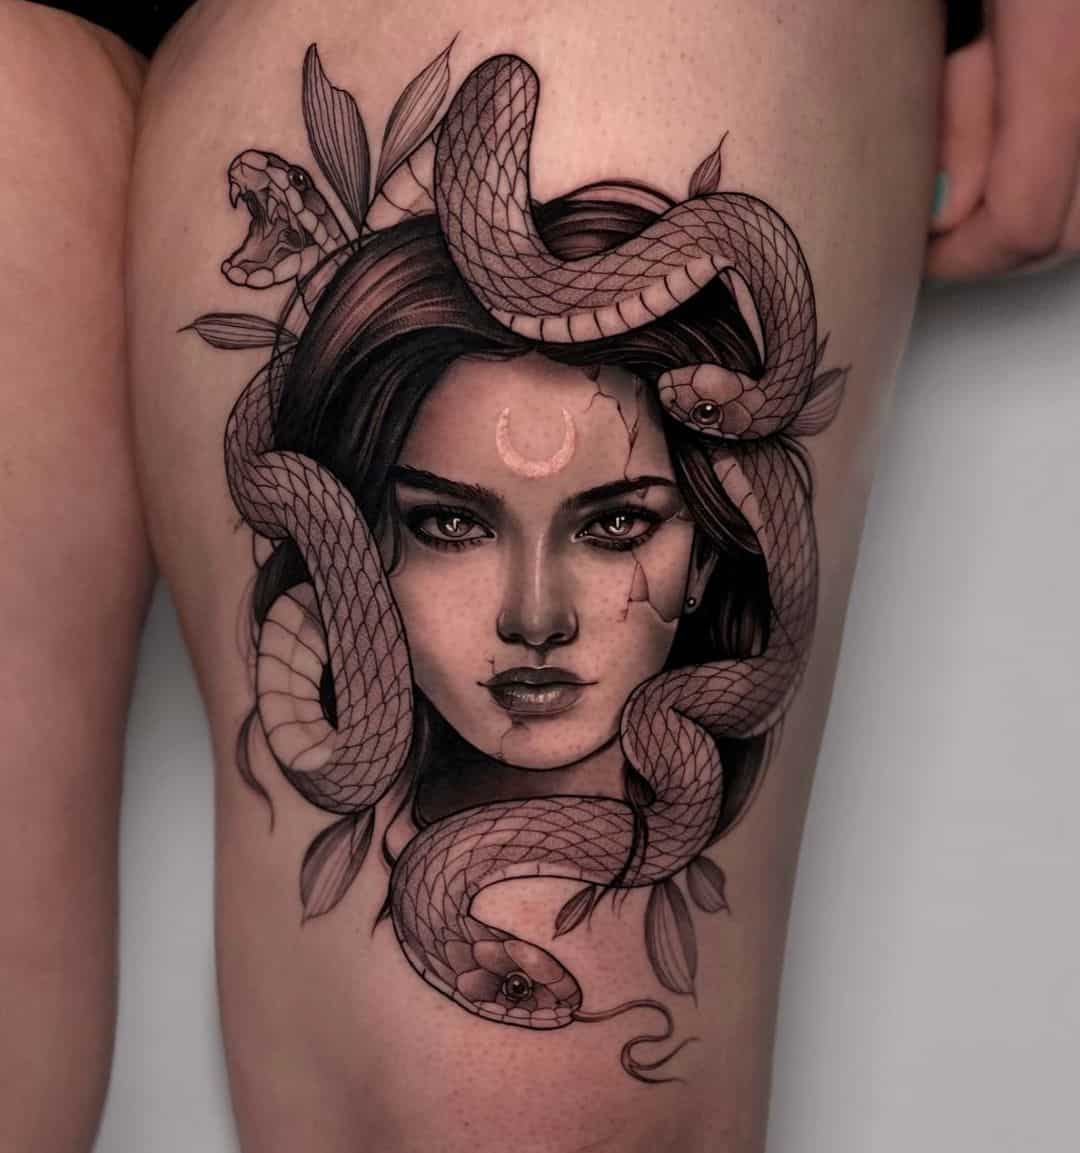 Medusa tattoo on thigh by victoria.tattoos